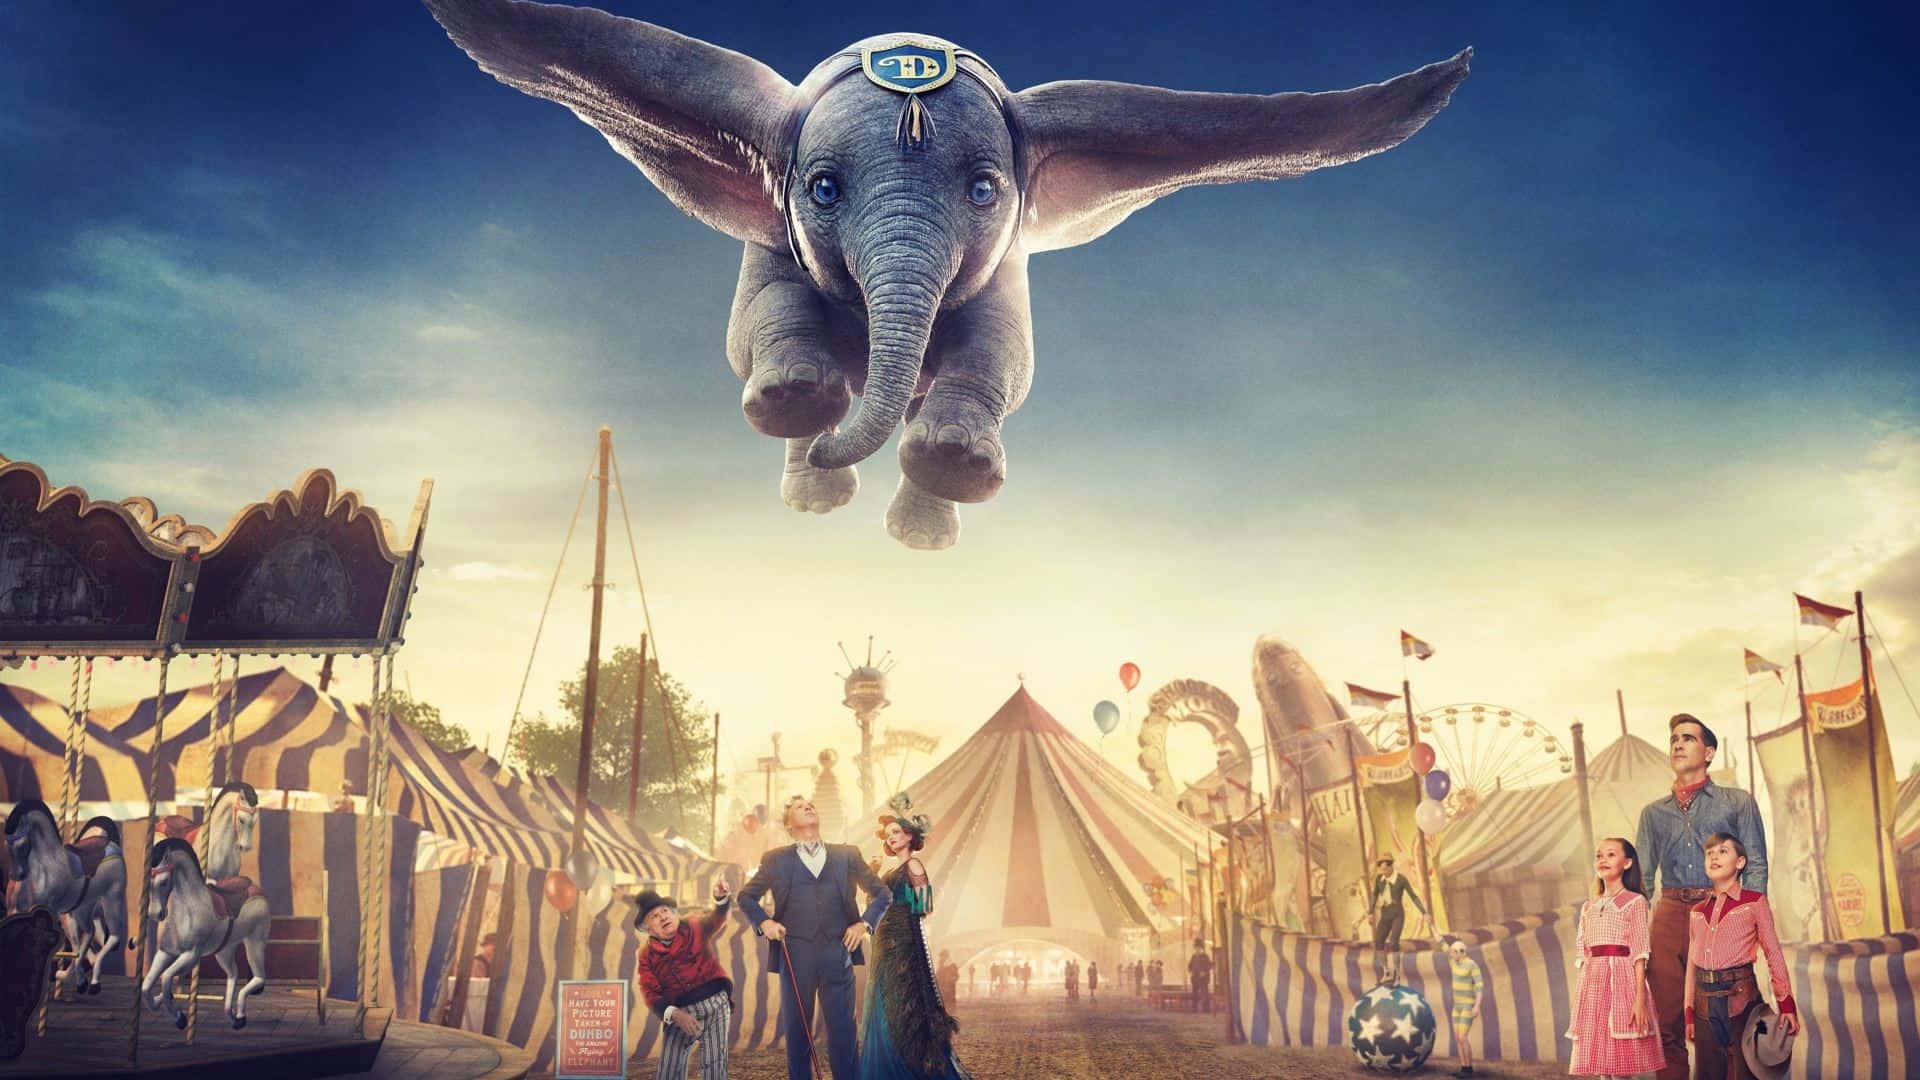 Dumbo (2019) 1080p Bluray Hindi Dubbed Google Drive